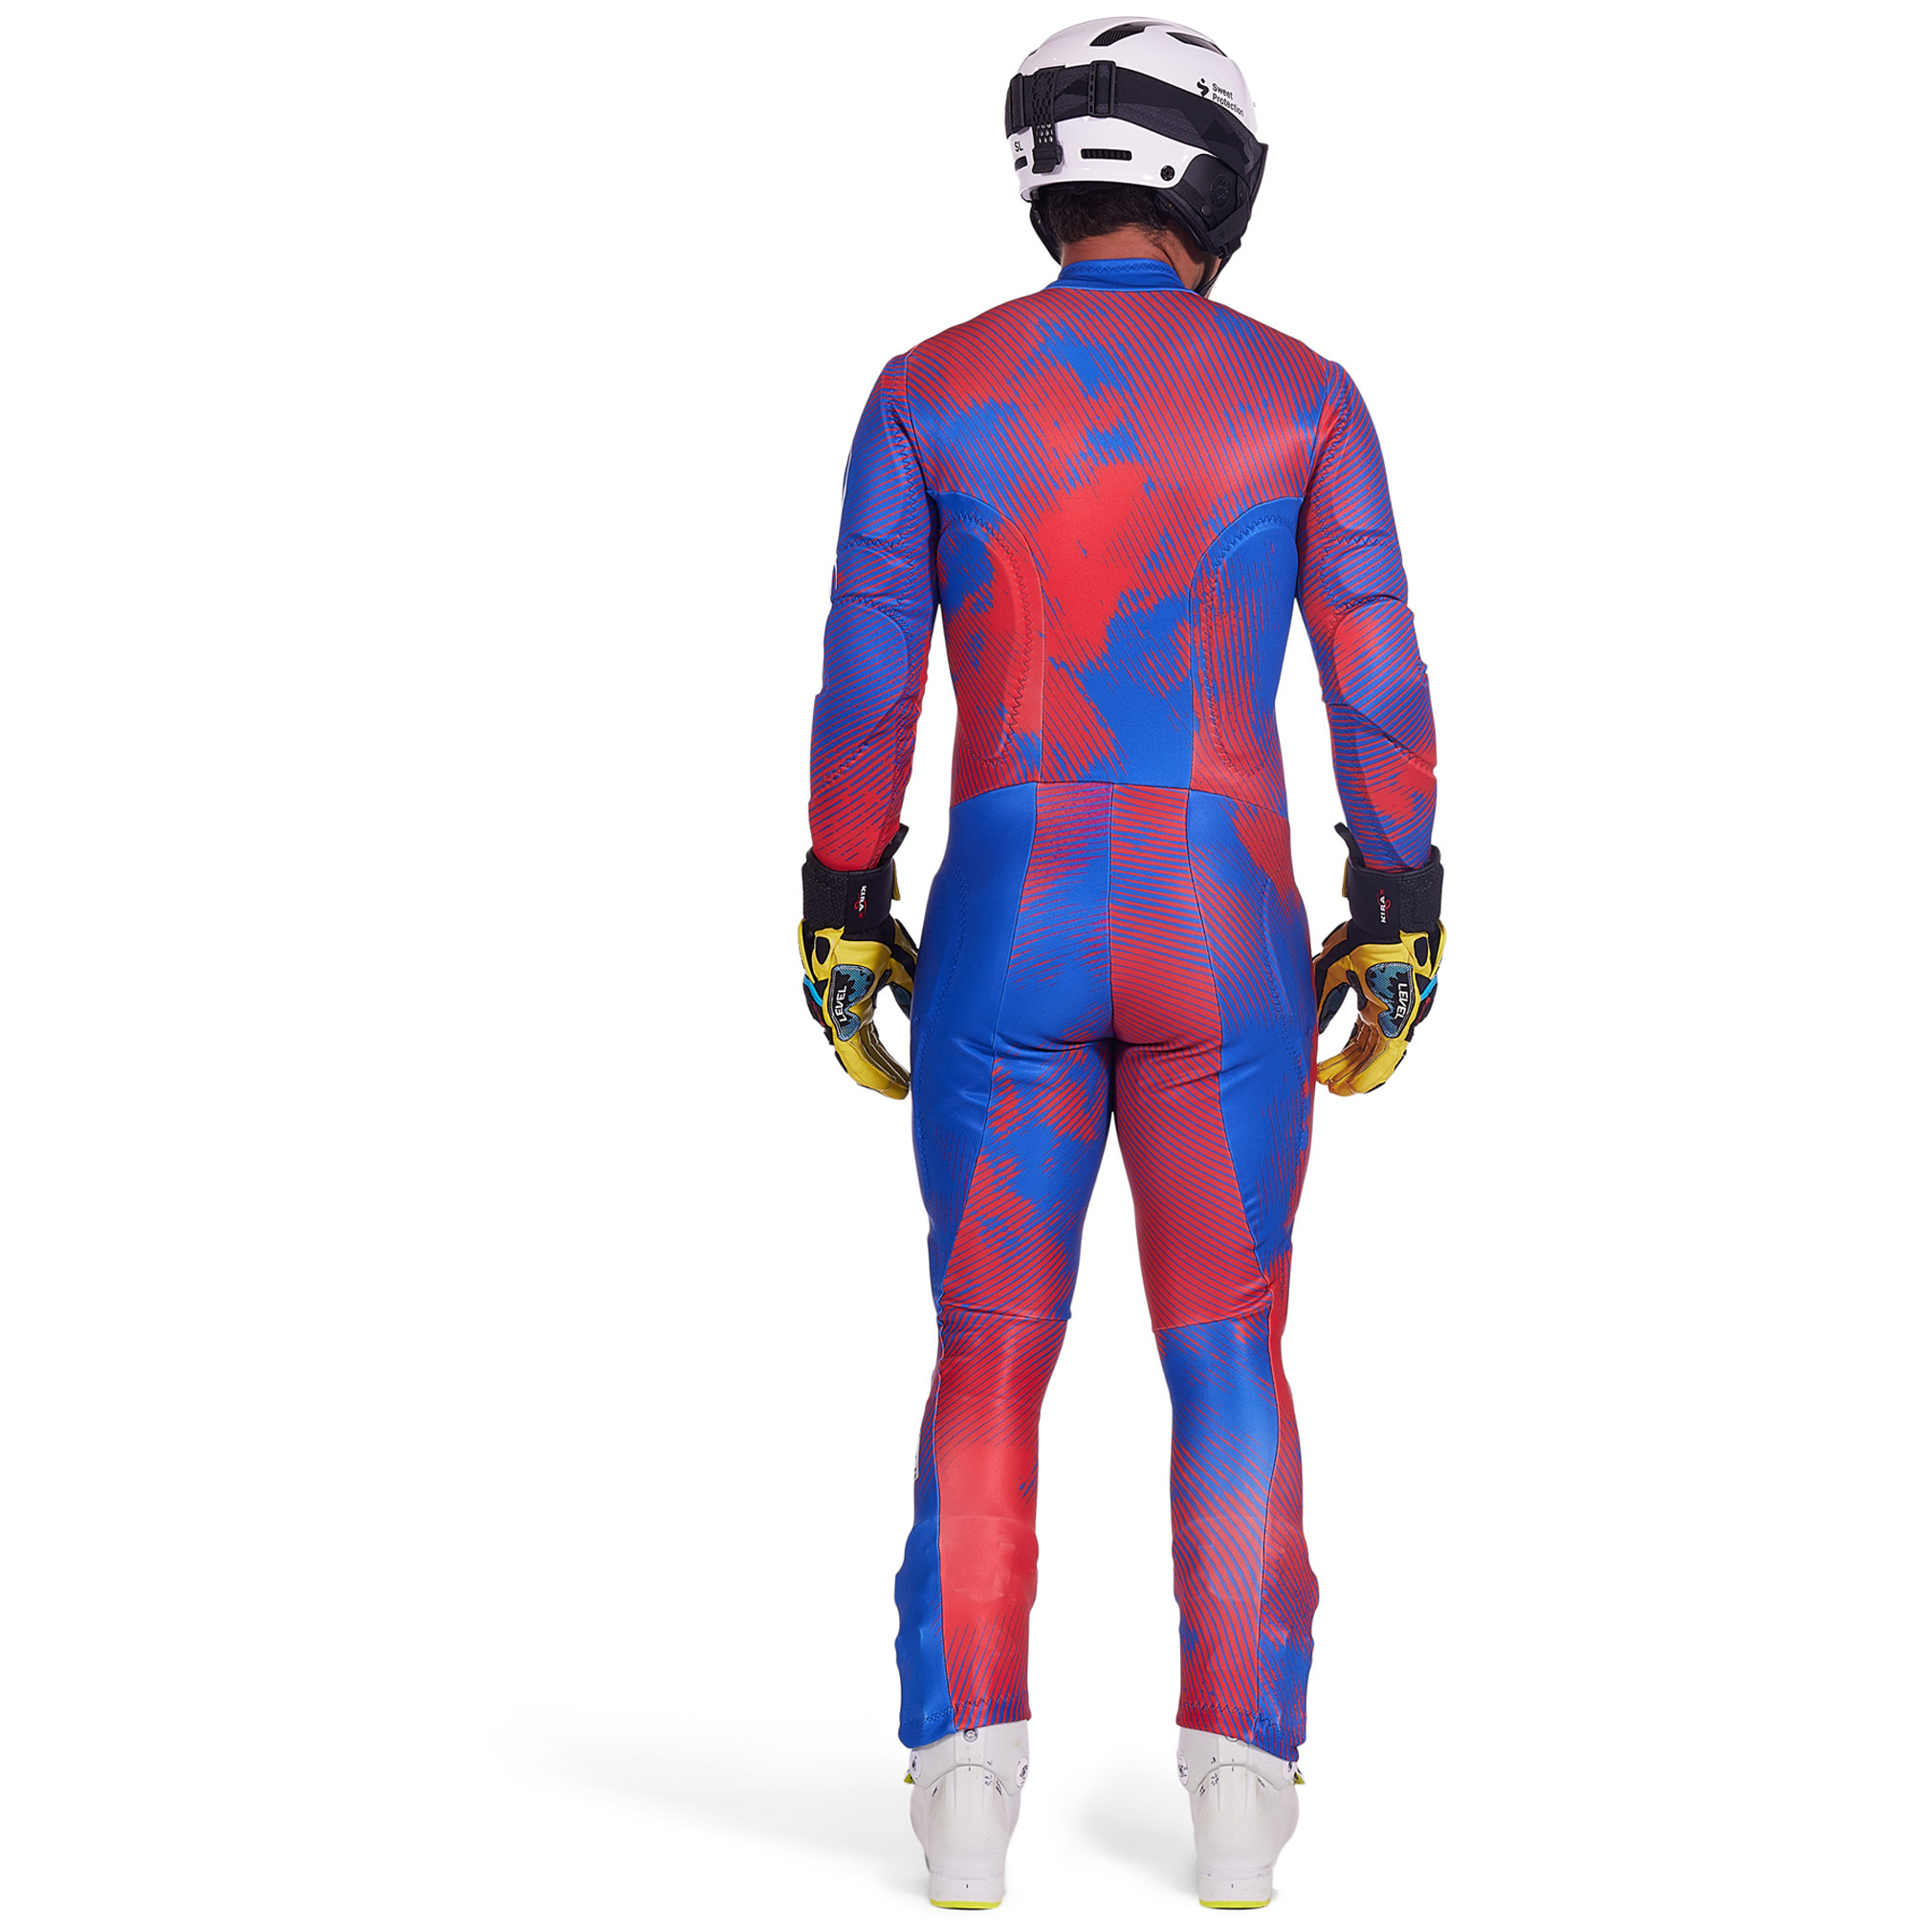 Spyder Performance GS Womens Race Suit - Ski Town